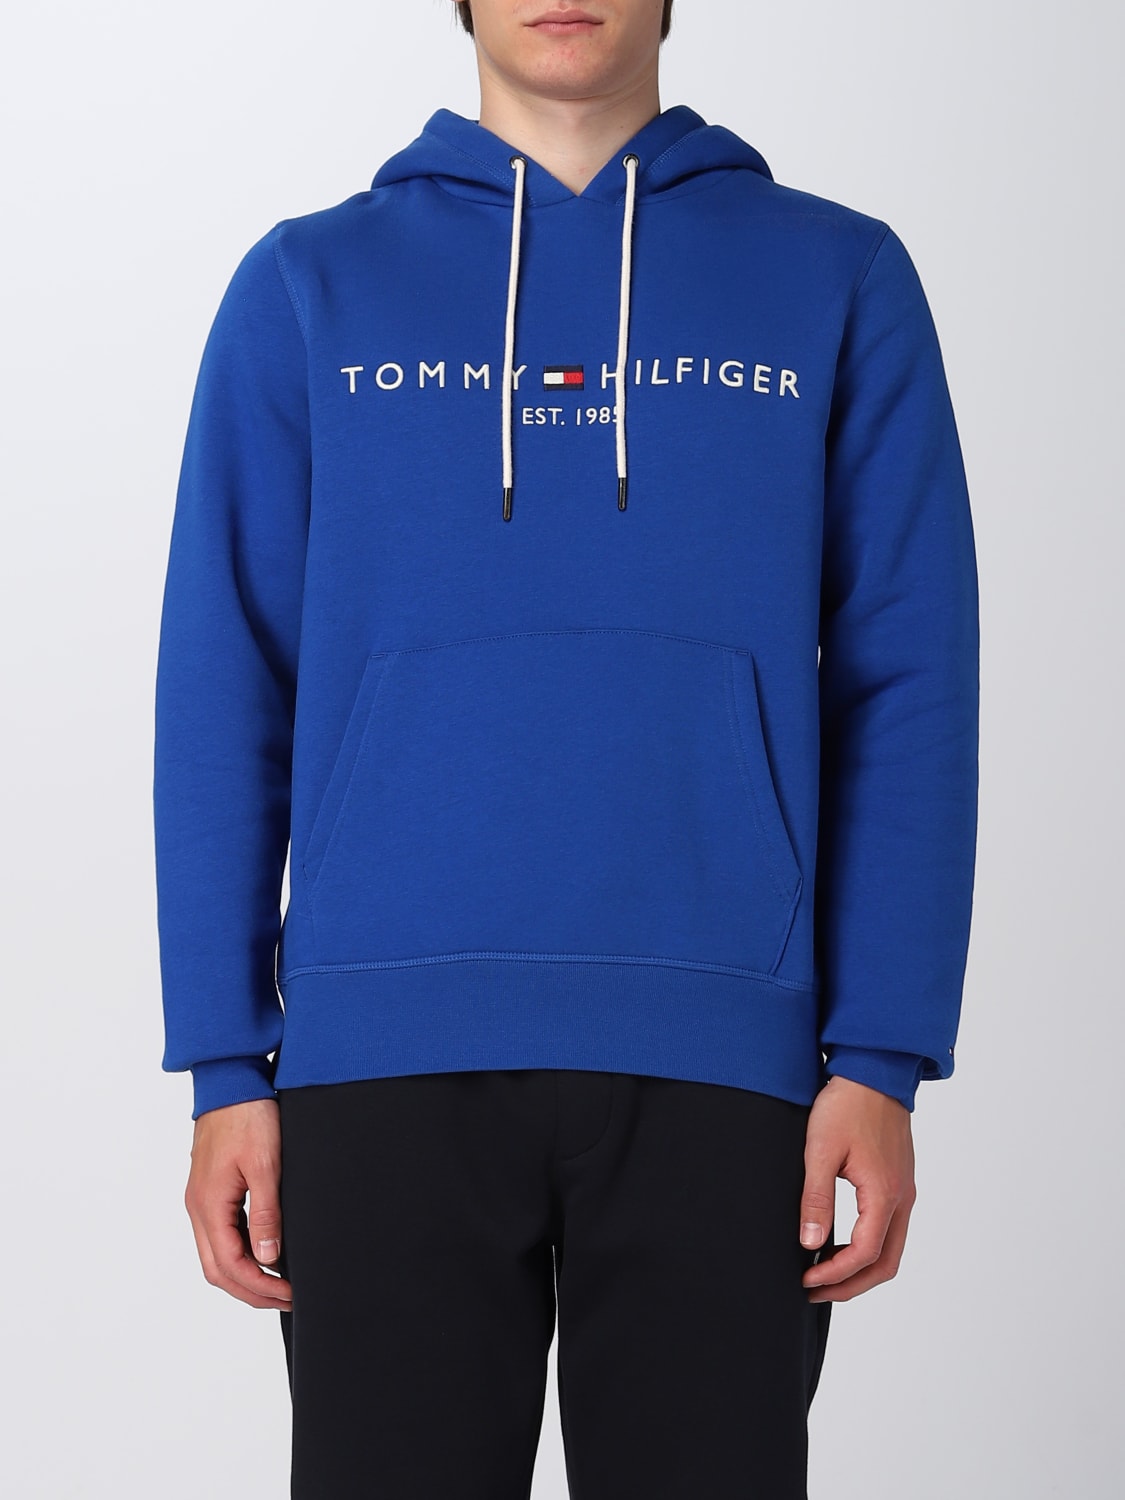 TOMMY HILFIGER: Sweatshirt homme - Bleu Royal  Sweatshirt Tommy Hilfiger  MW0MW11599 en ligne sur